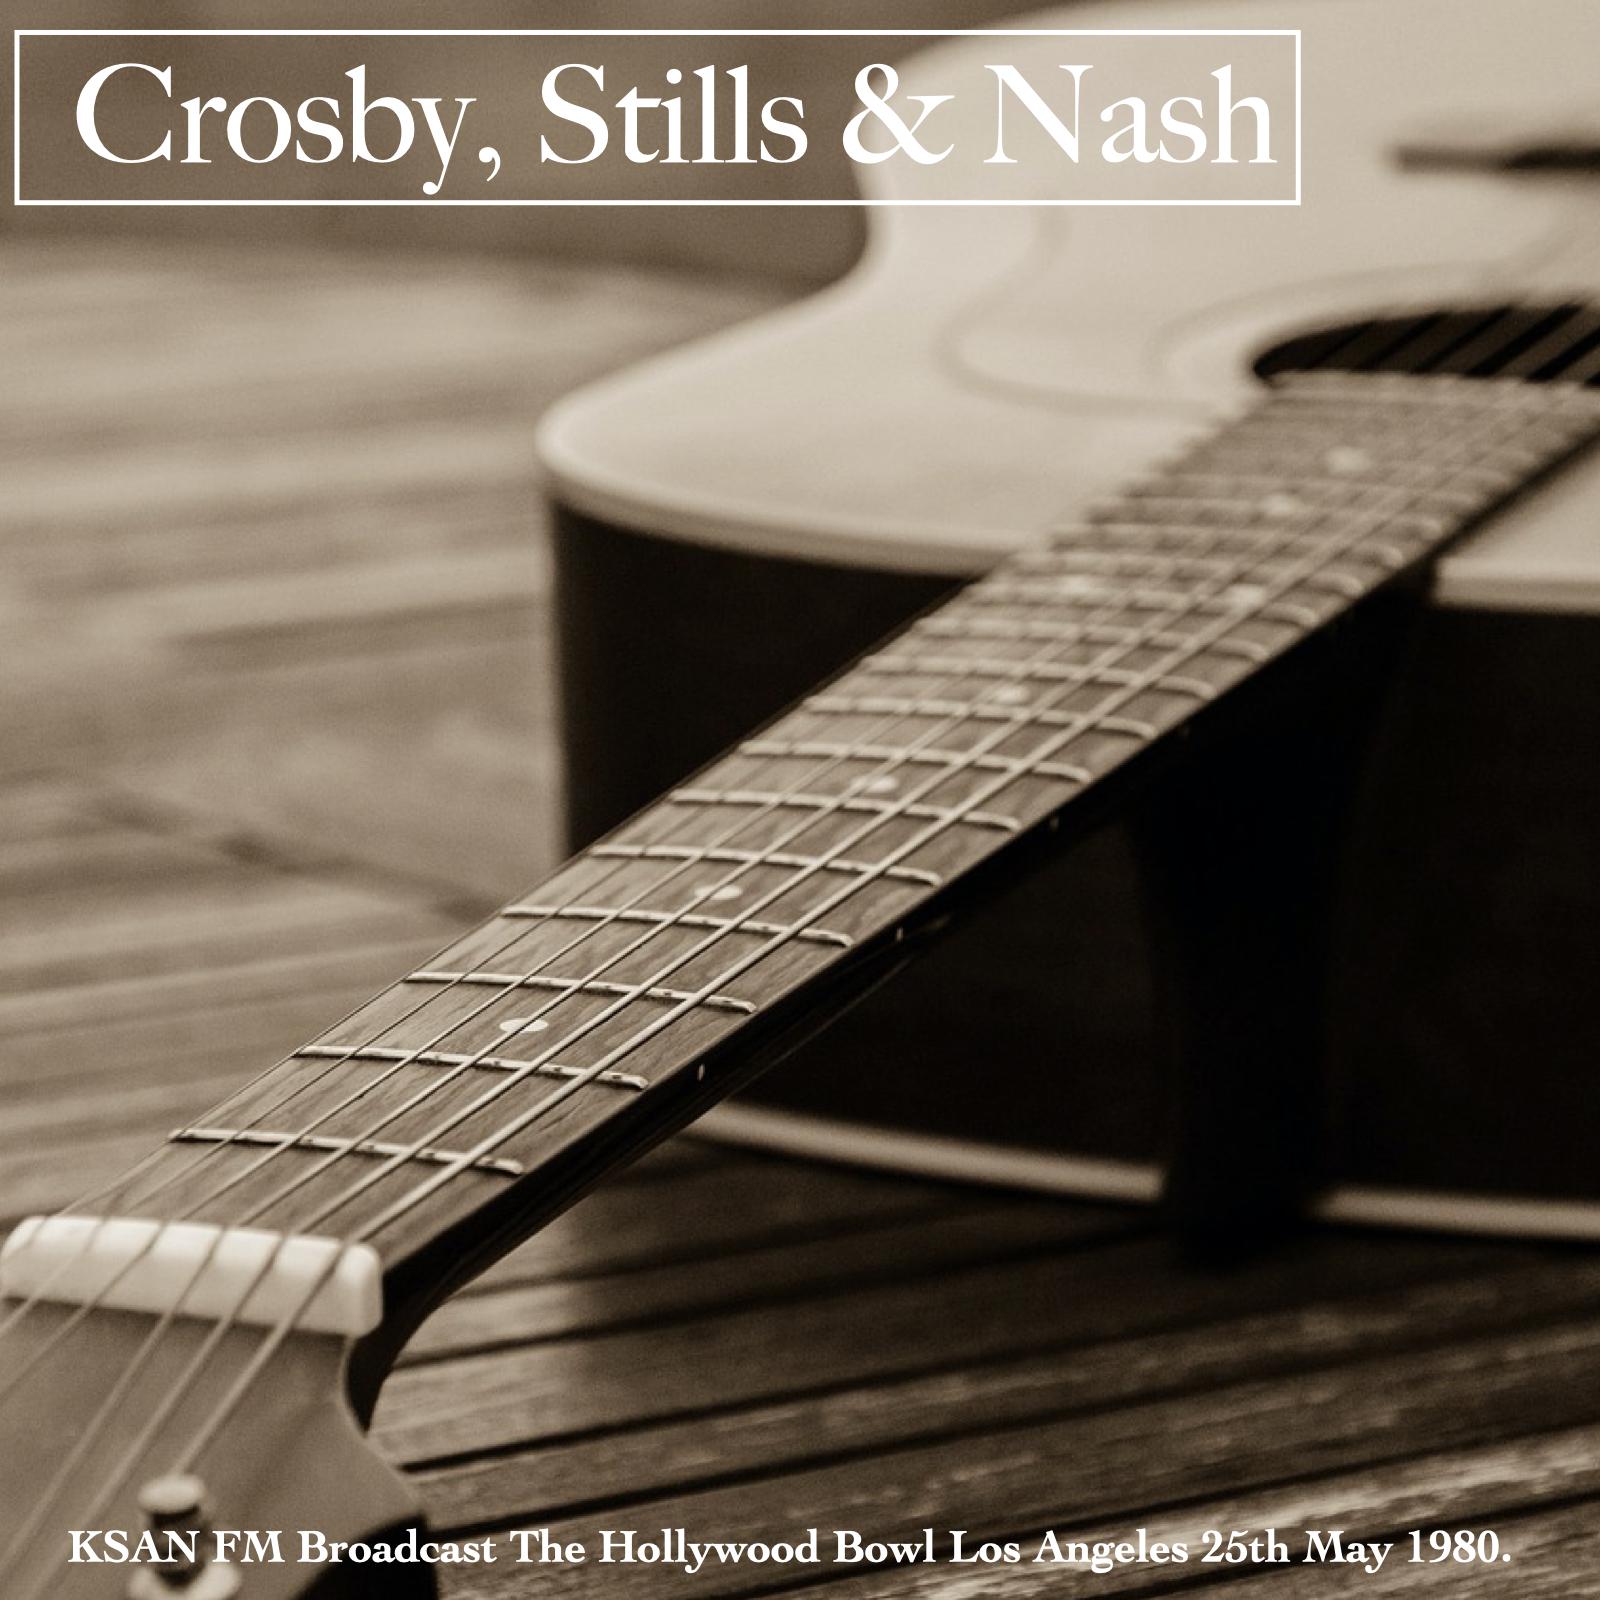 Crosby, Stills & Nash - KSAN FM Broadcast The Hollywood Bowl Los Angeles 25th May 1980.